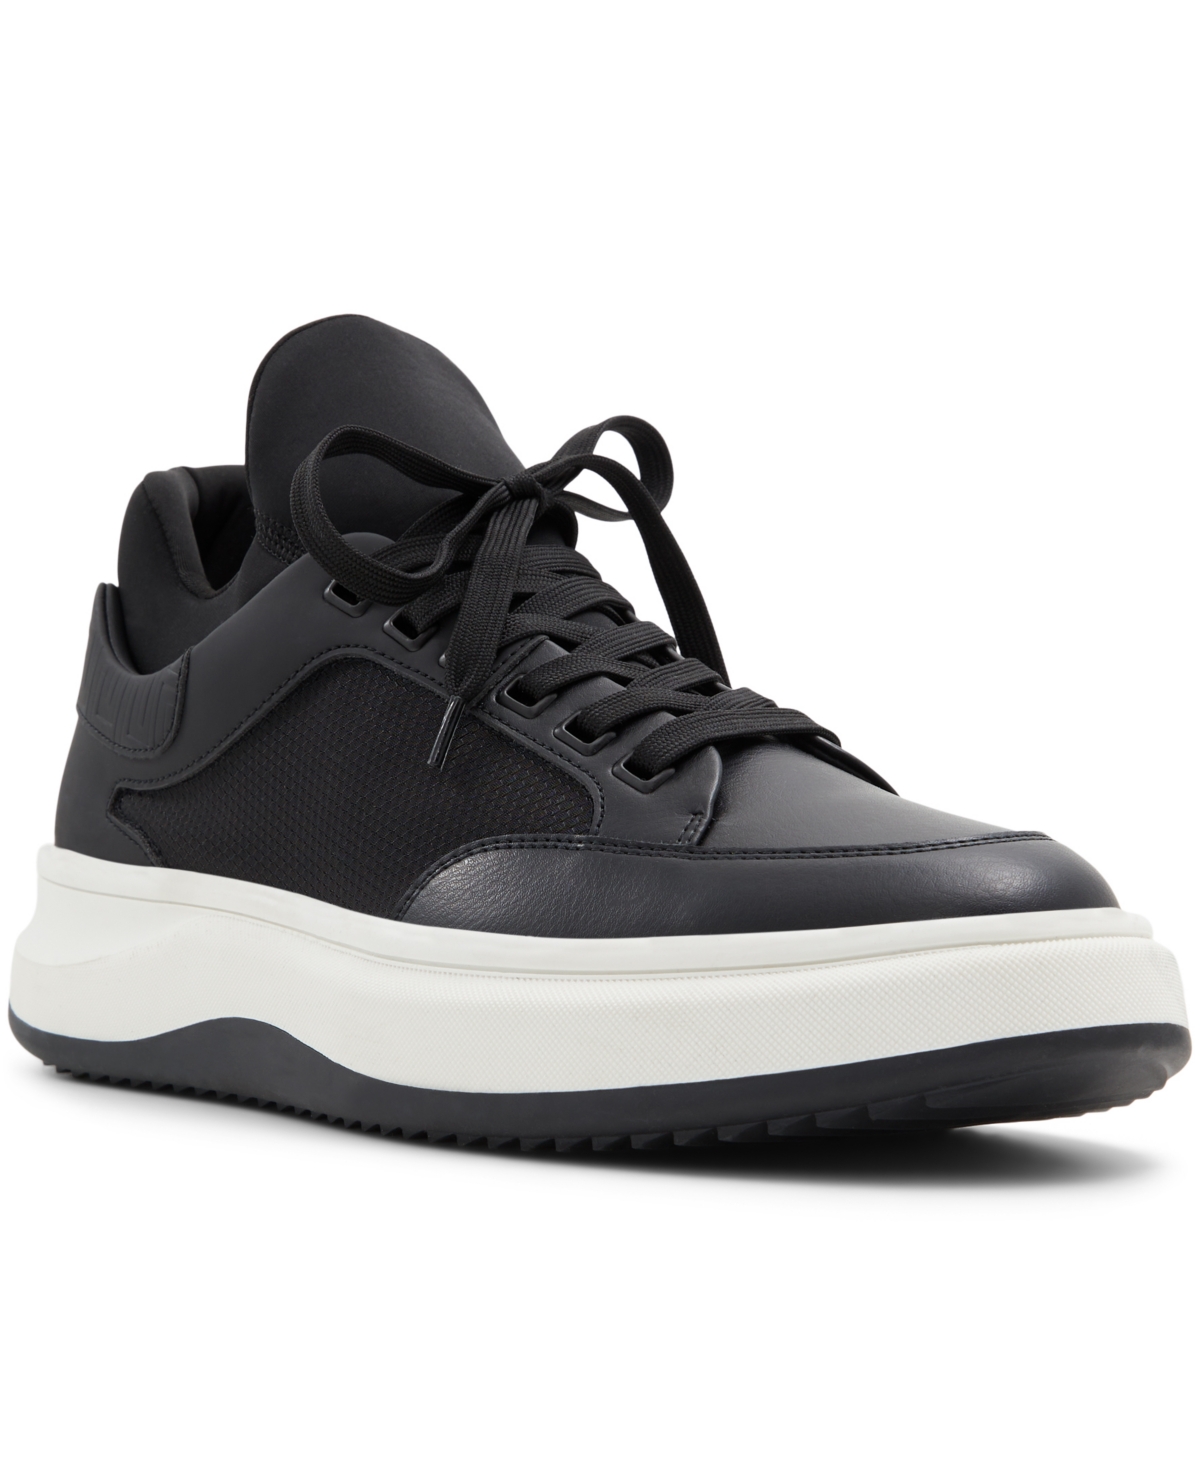 Men's Hyperspec Fashion Athletic Sneaker - Black